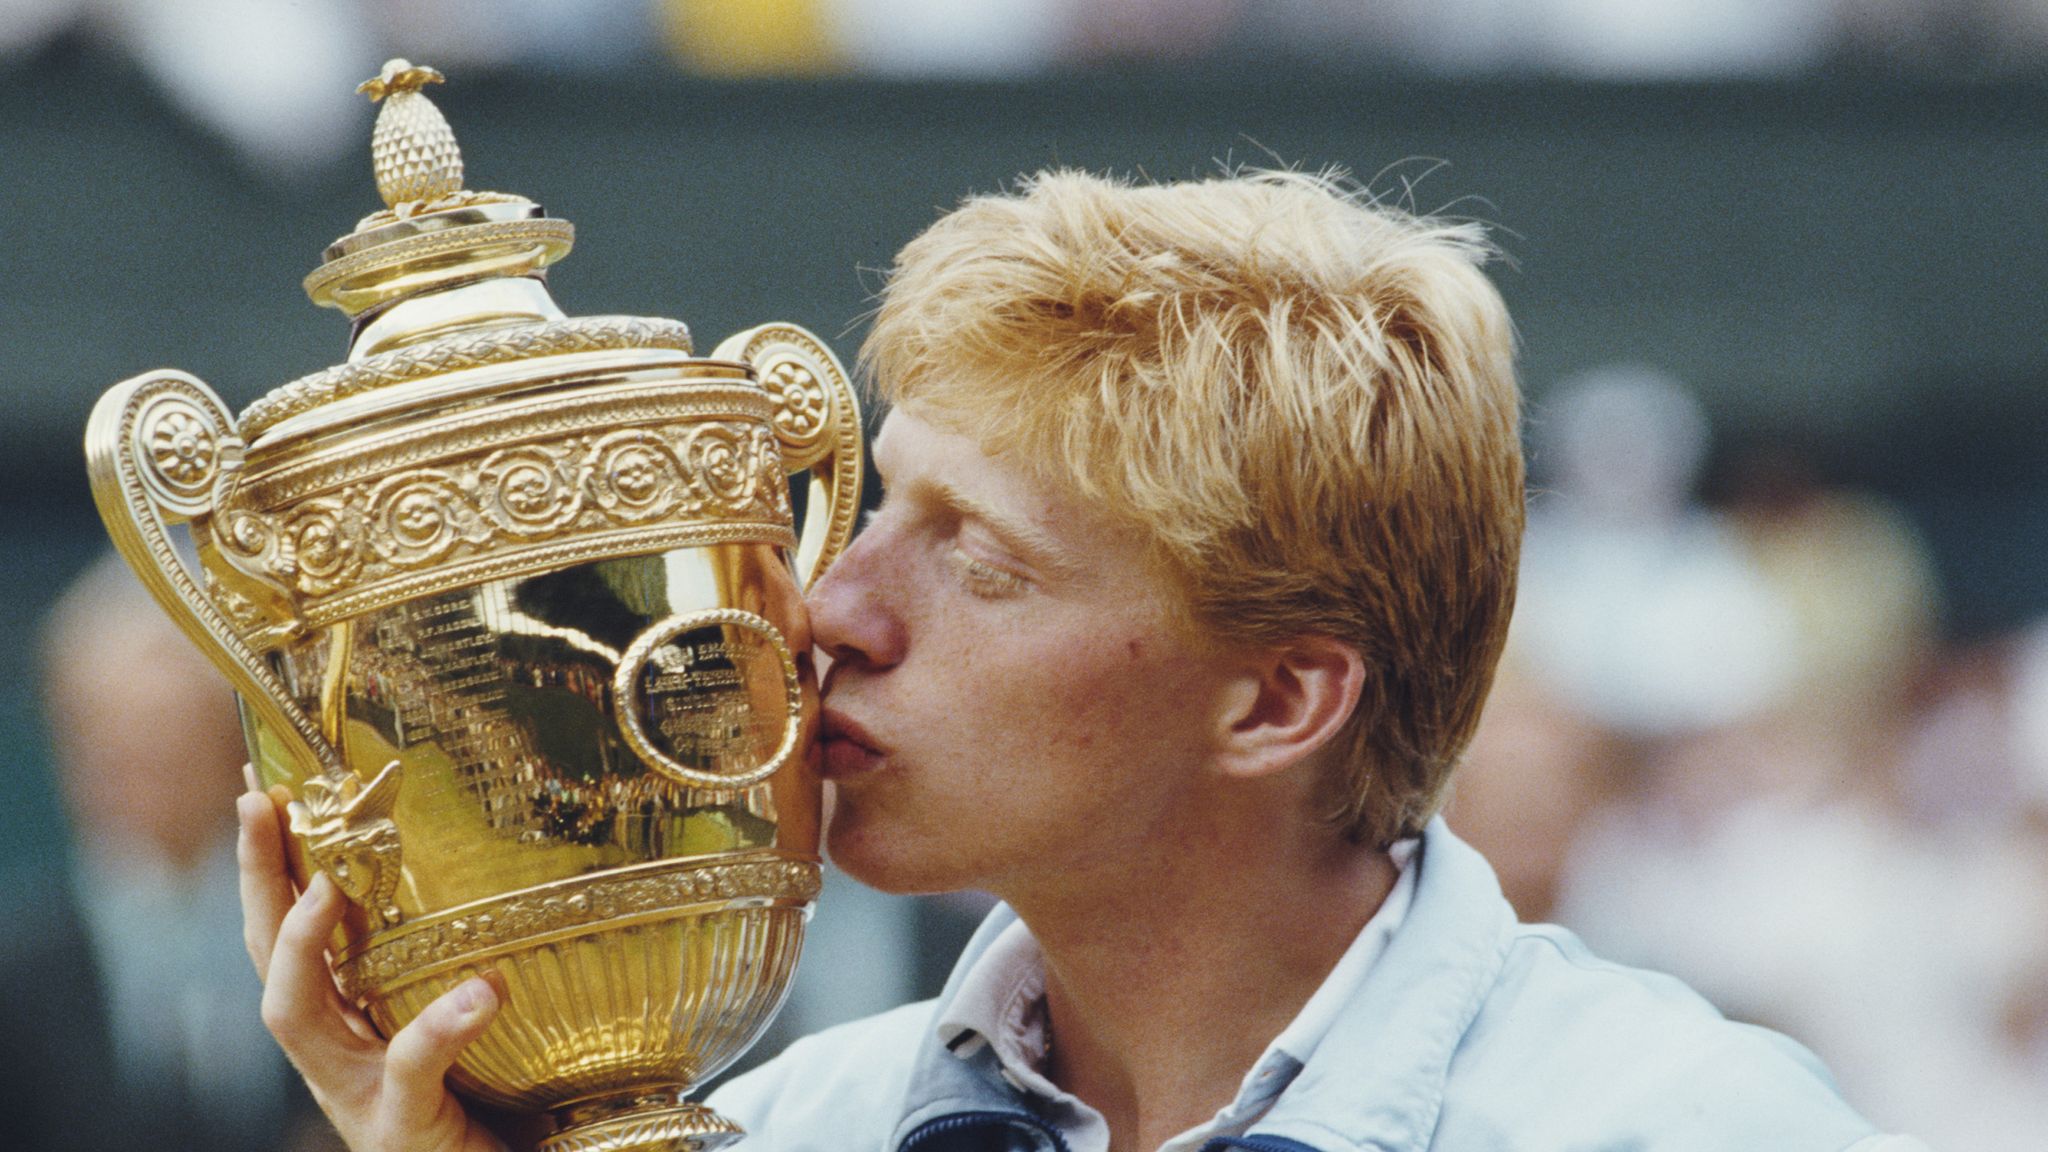 Boris Becker appointed head of men's tennis in Germany | Tennis News ...